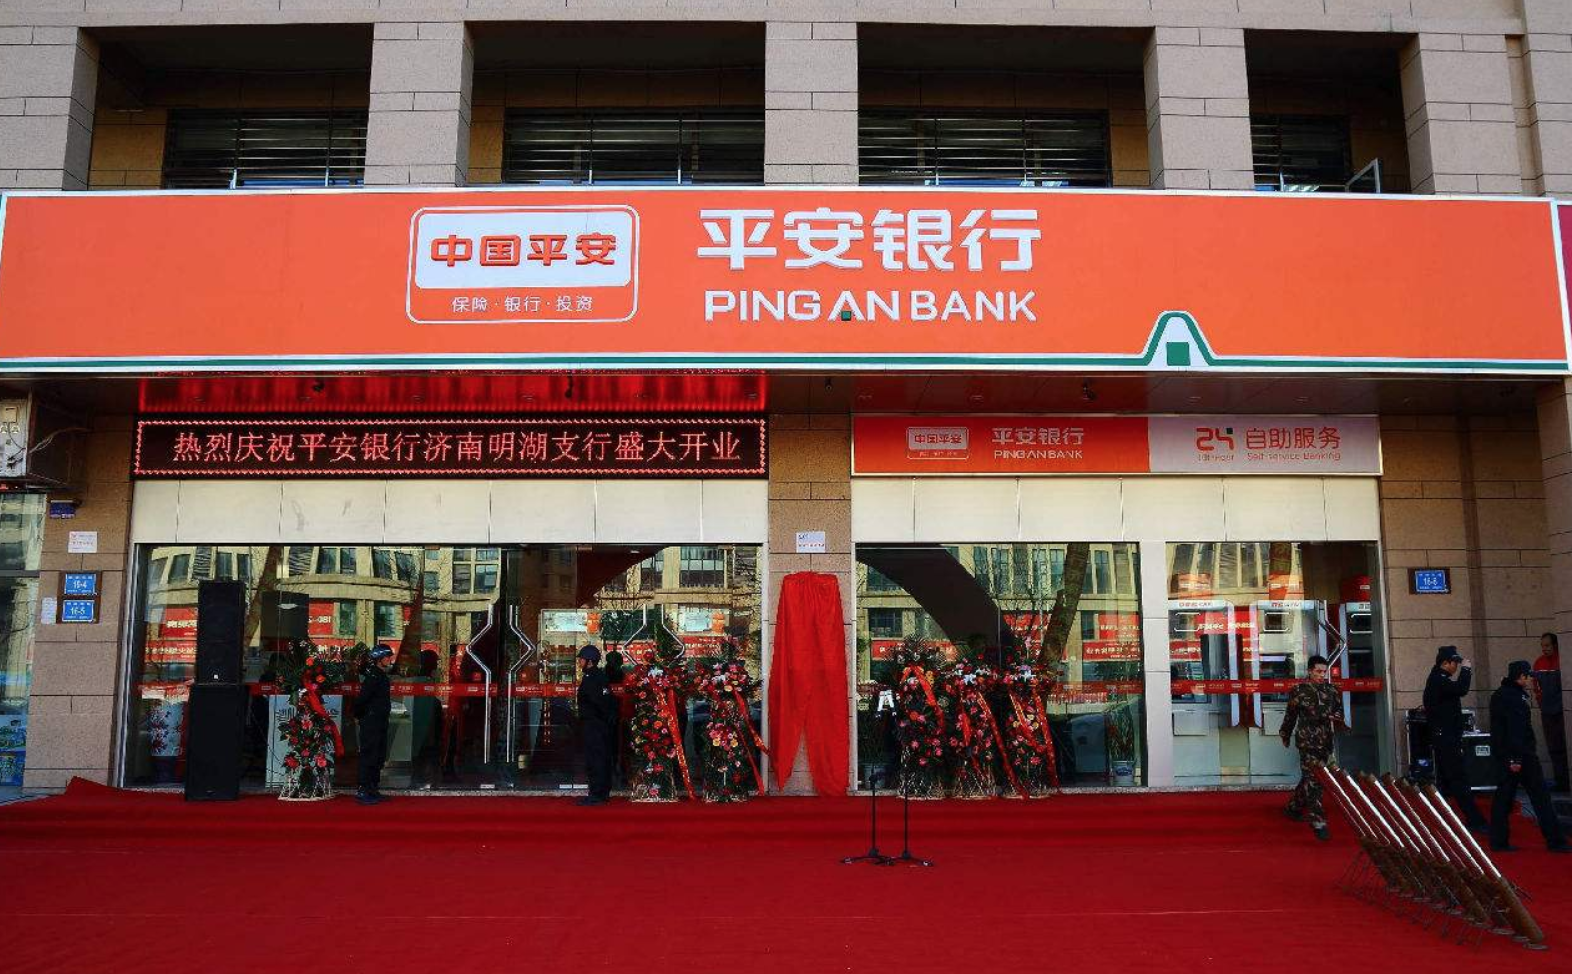 Hunchun rural commercial bank co. Pingan китайская компания. Страховые компании в Китае. Ping an Bank. “Ping an” компания.